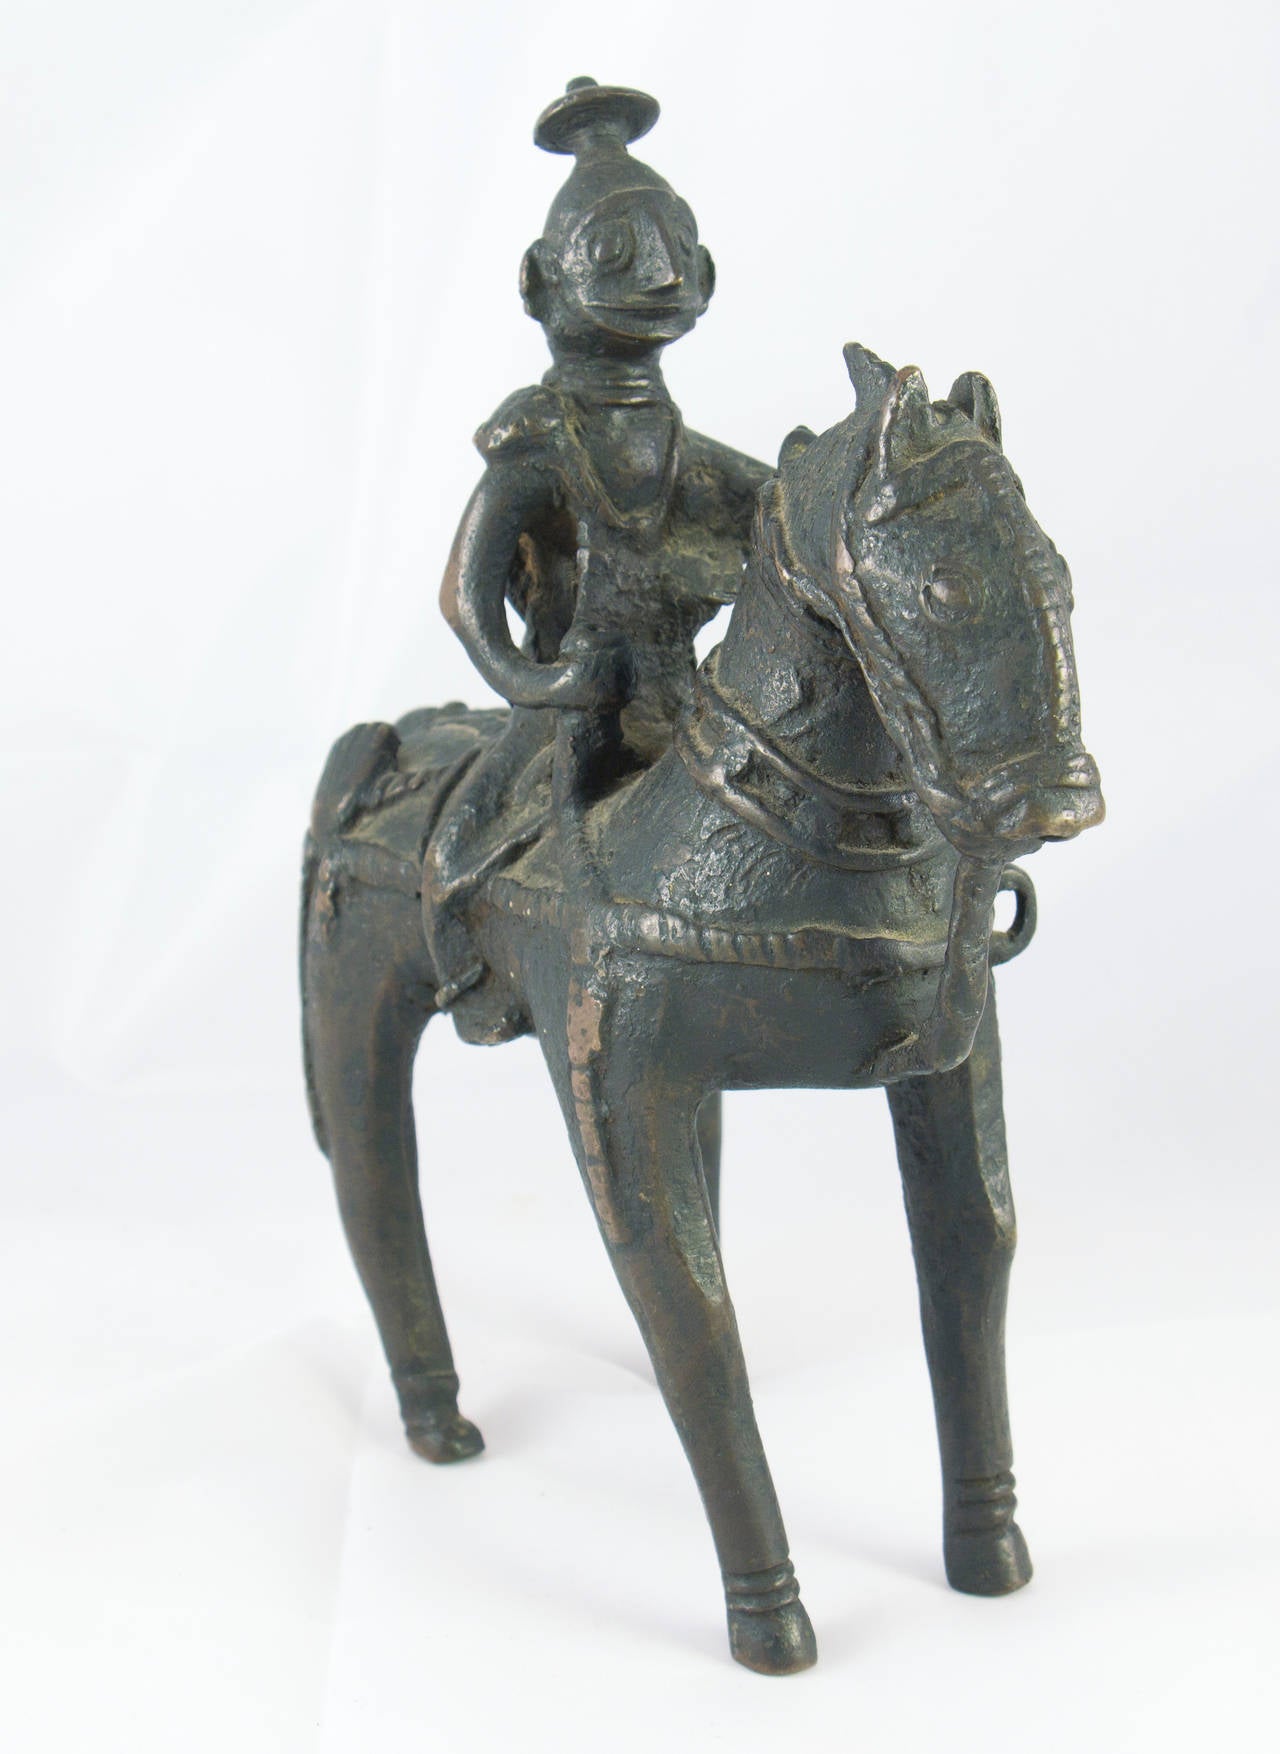 Circa 18th/19th Century. Indian Jungli cast bronze warrior on horseback. A very fine example of the genre.